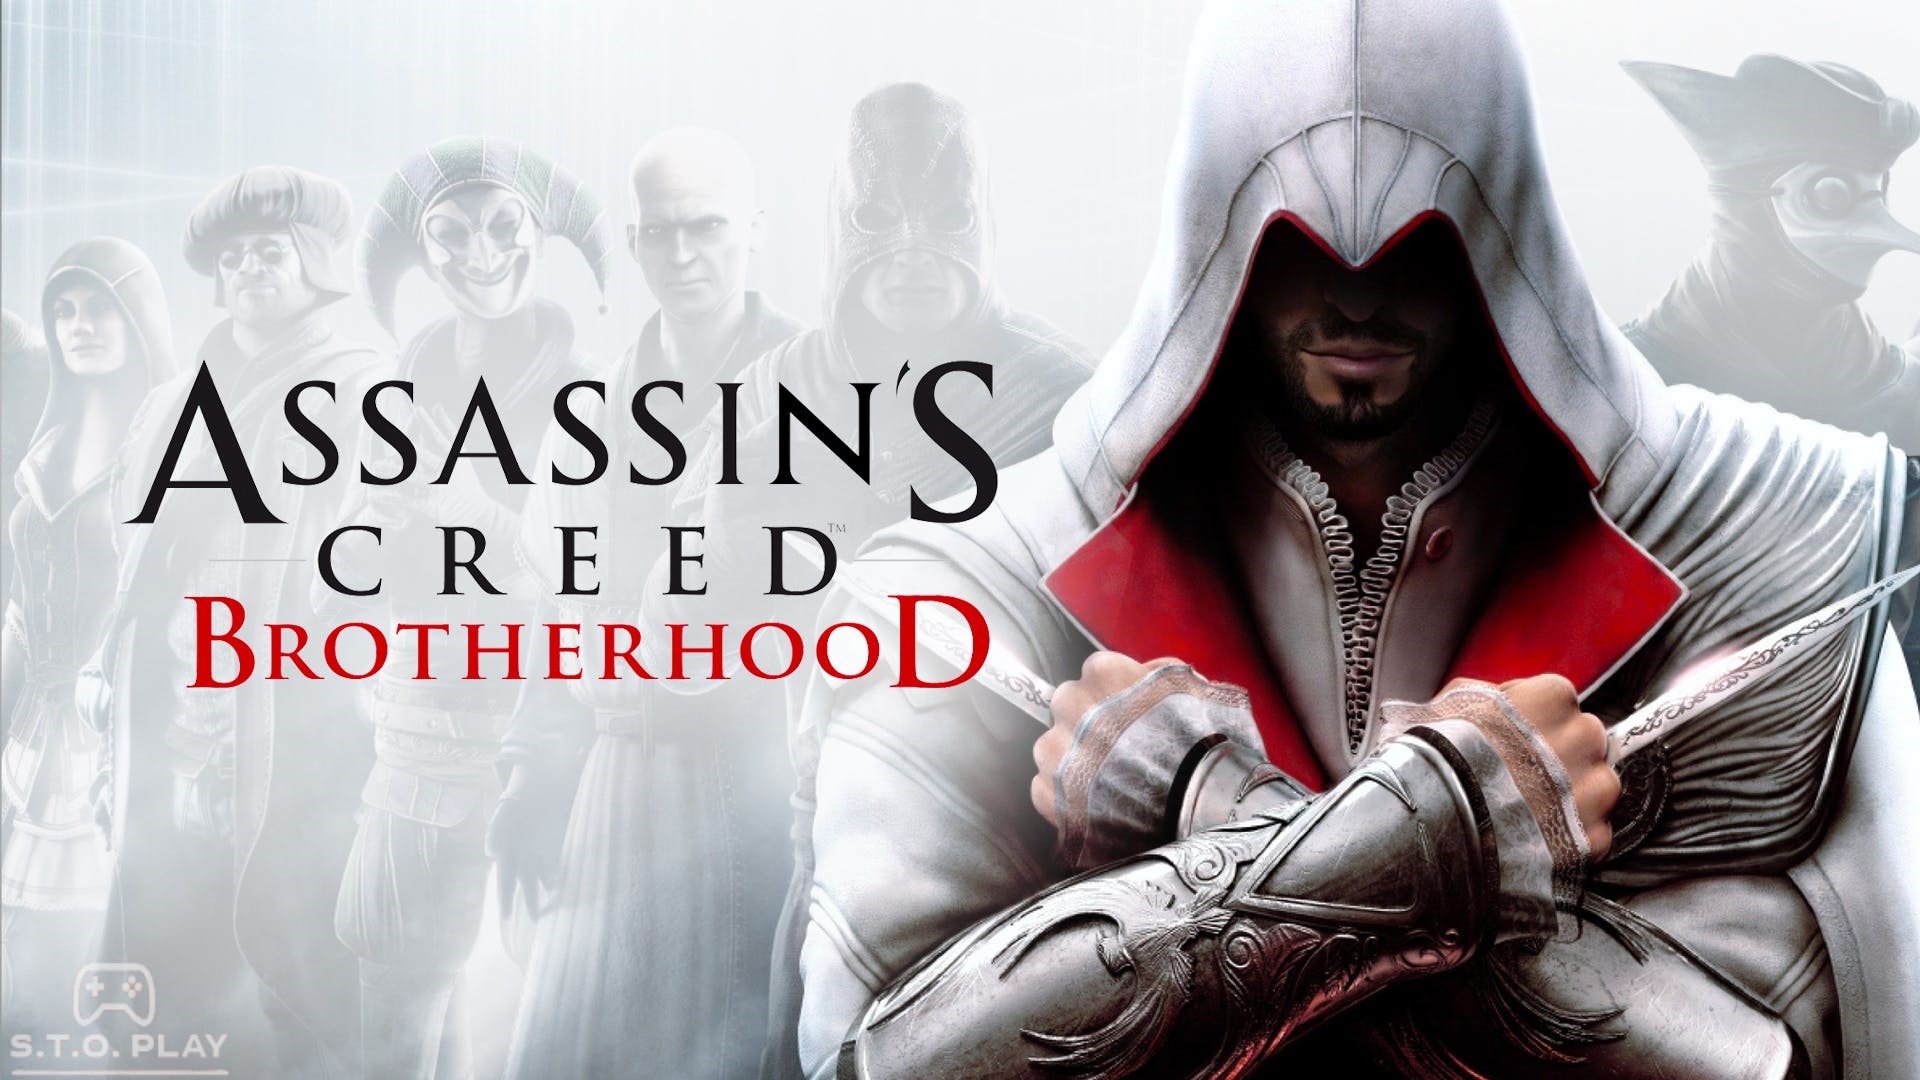 Assassins creed brotherhood на steam фото 12